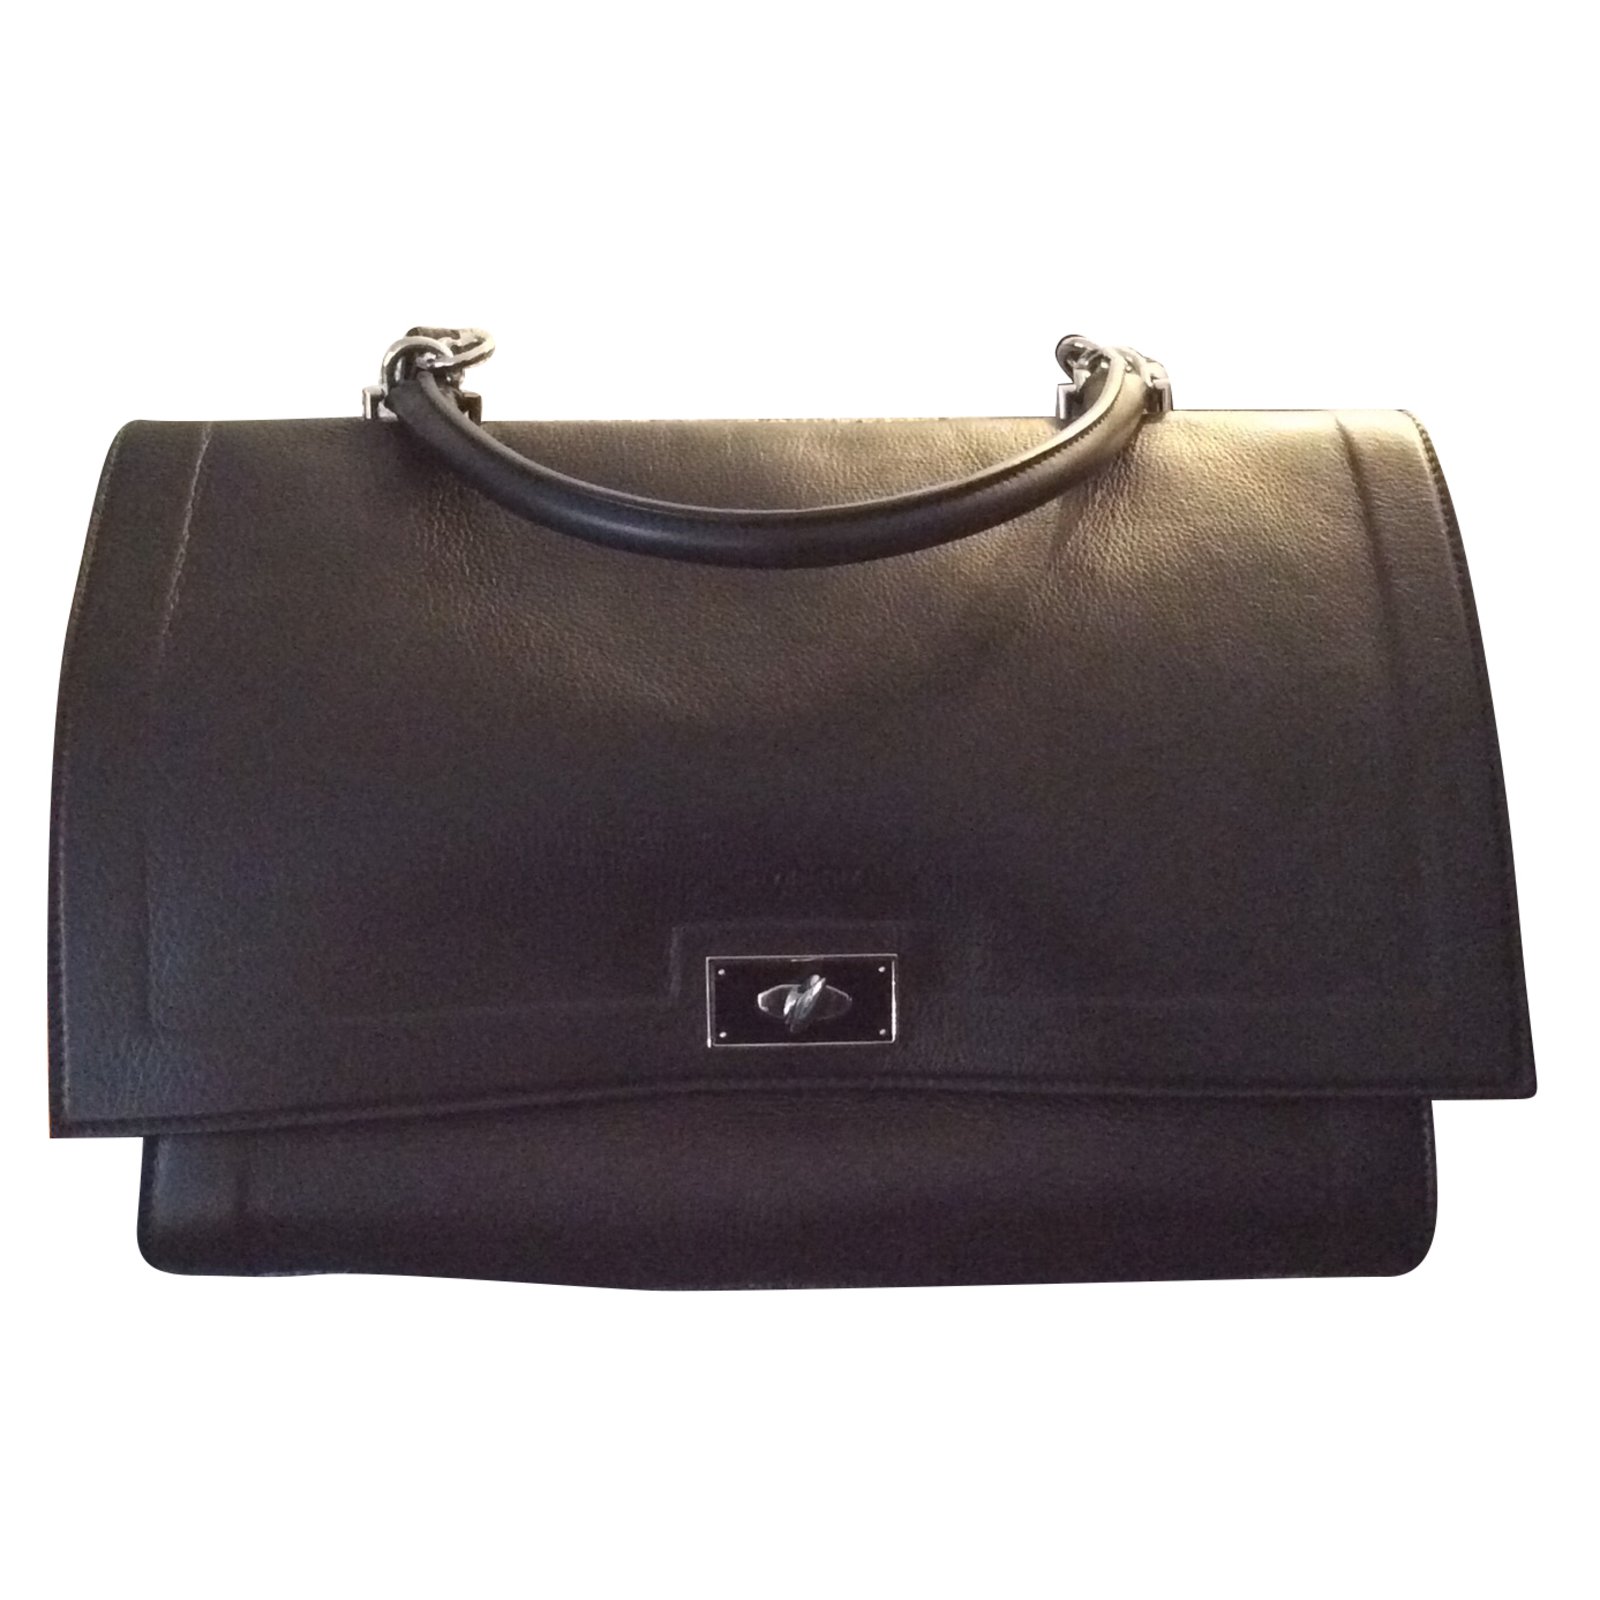 Givenchy Shark Bag Handbags Leather 